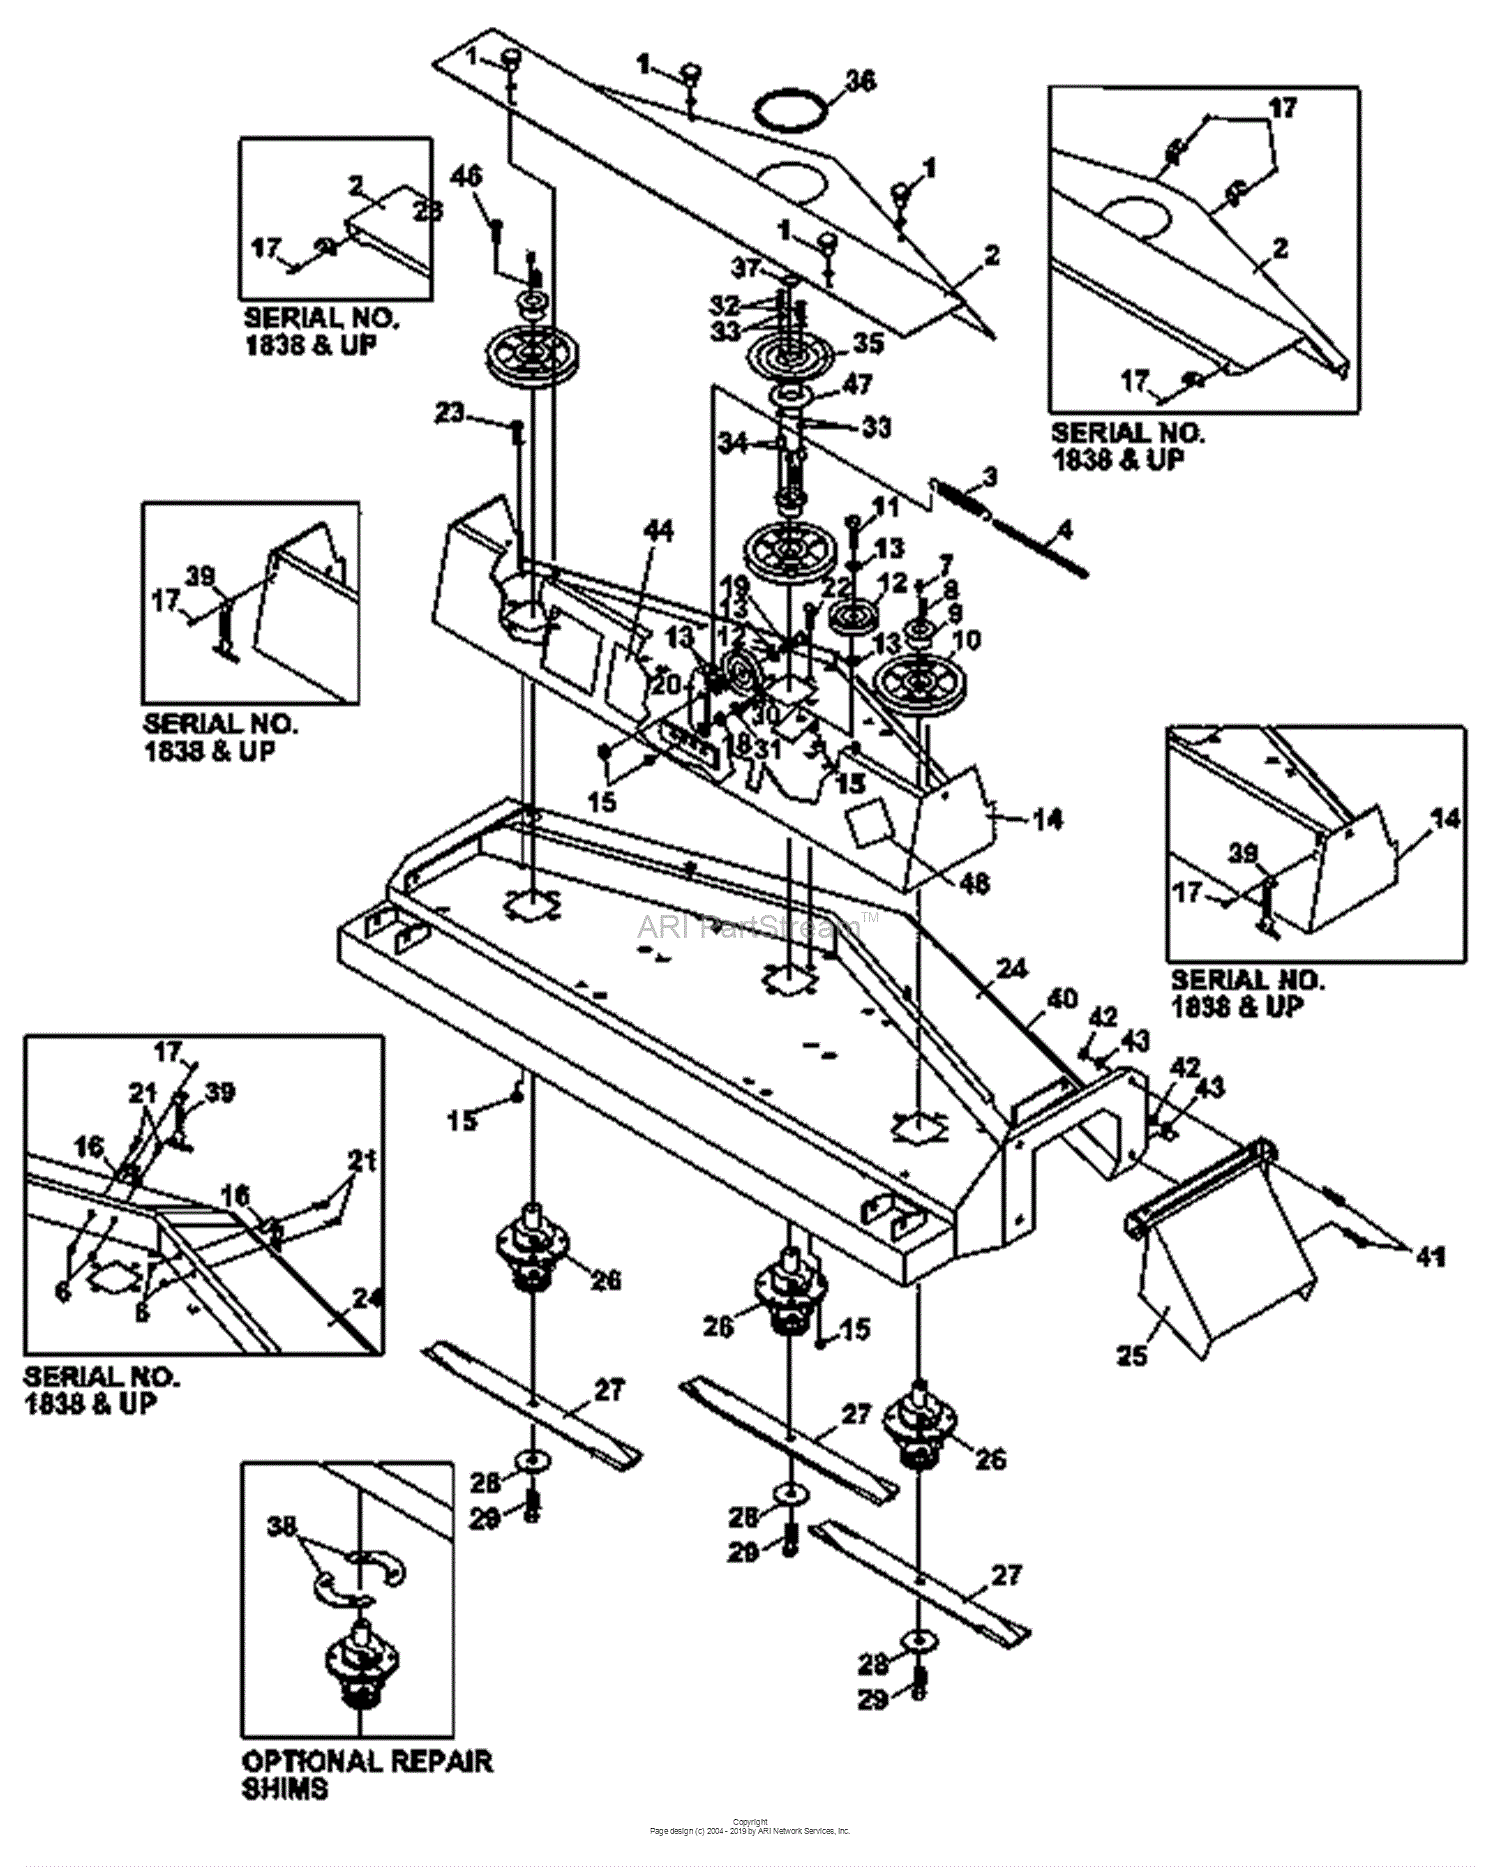 Bobcat Mower Parts Diagrams